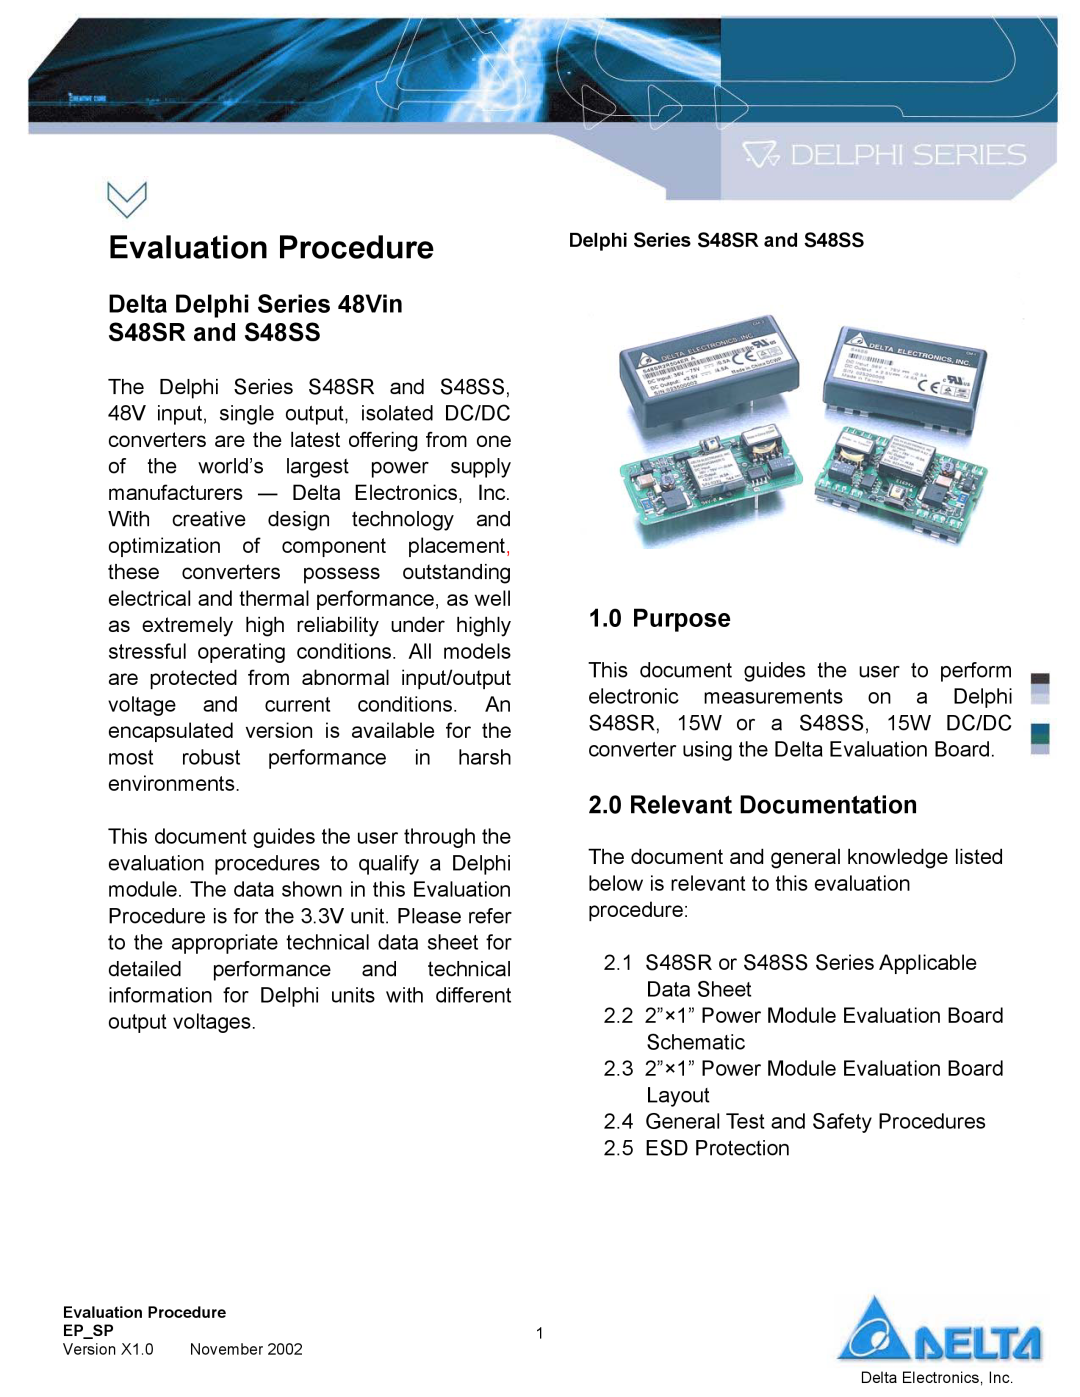 Delta Electronics manual Delta Delphi Series 48Vin S48SR and S48SS, Purpose, Relevant Documentation 